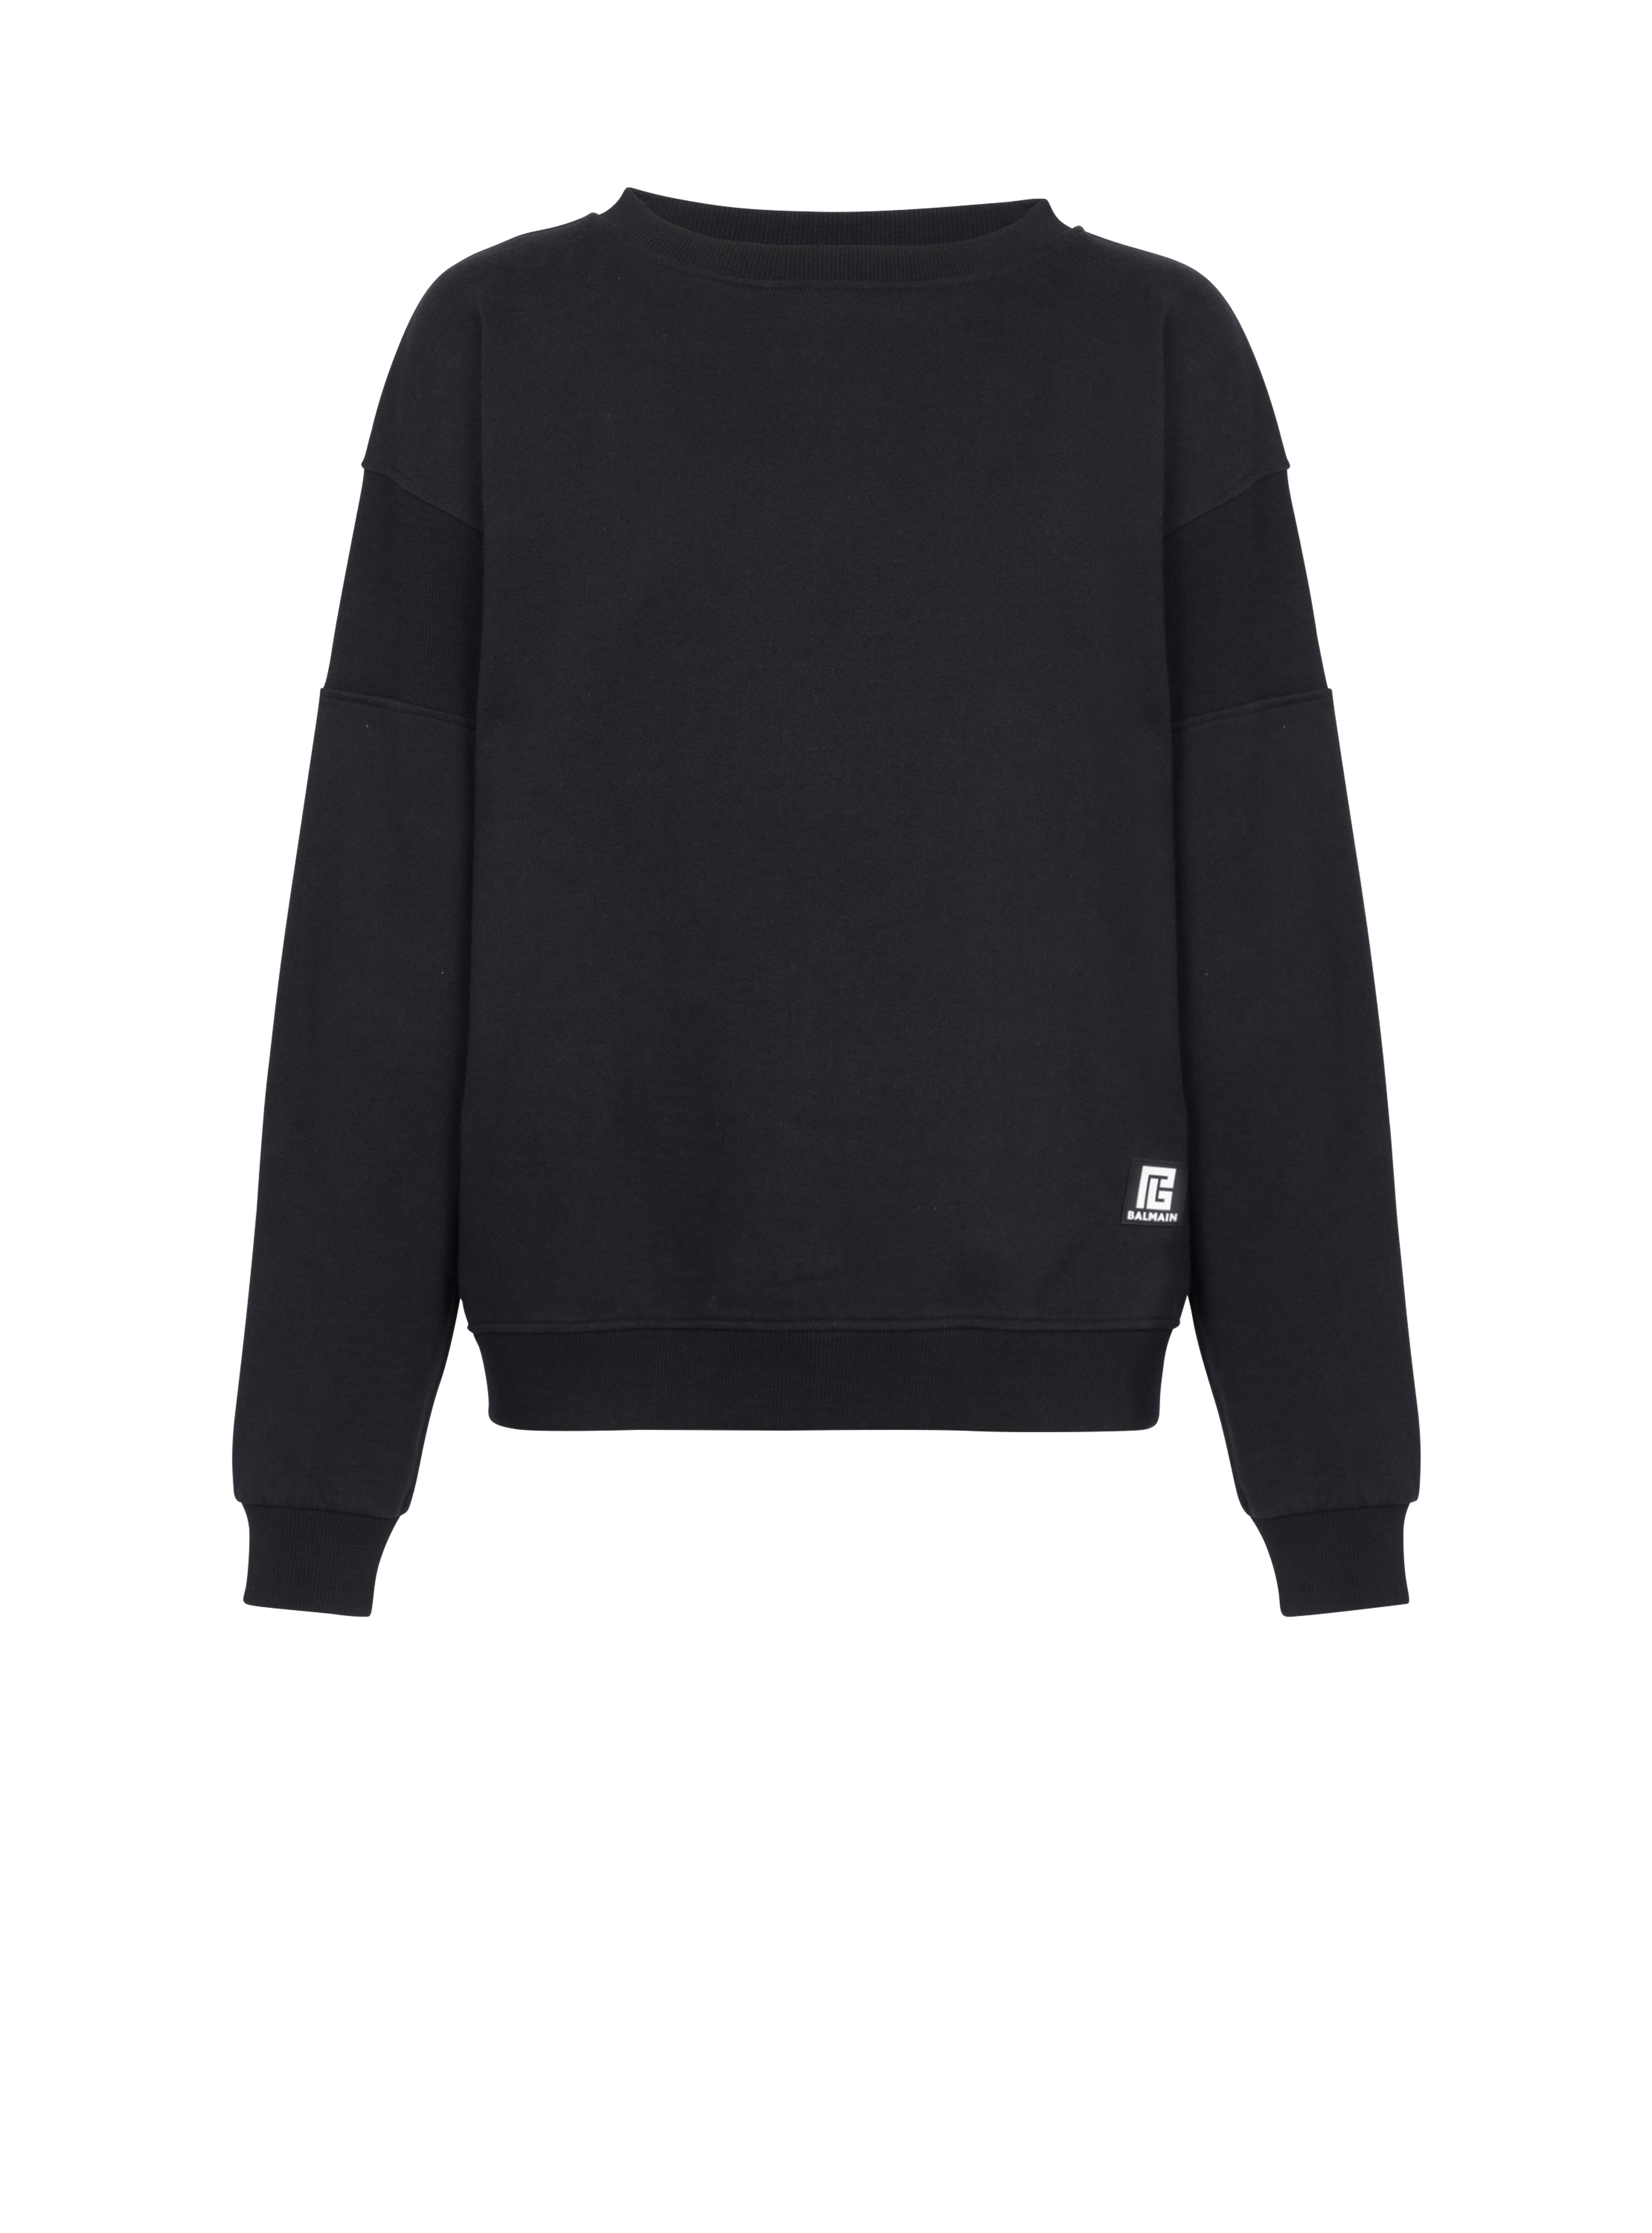 Eco-designed cotton sweatshirt with Balmain logo print, black